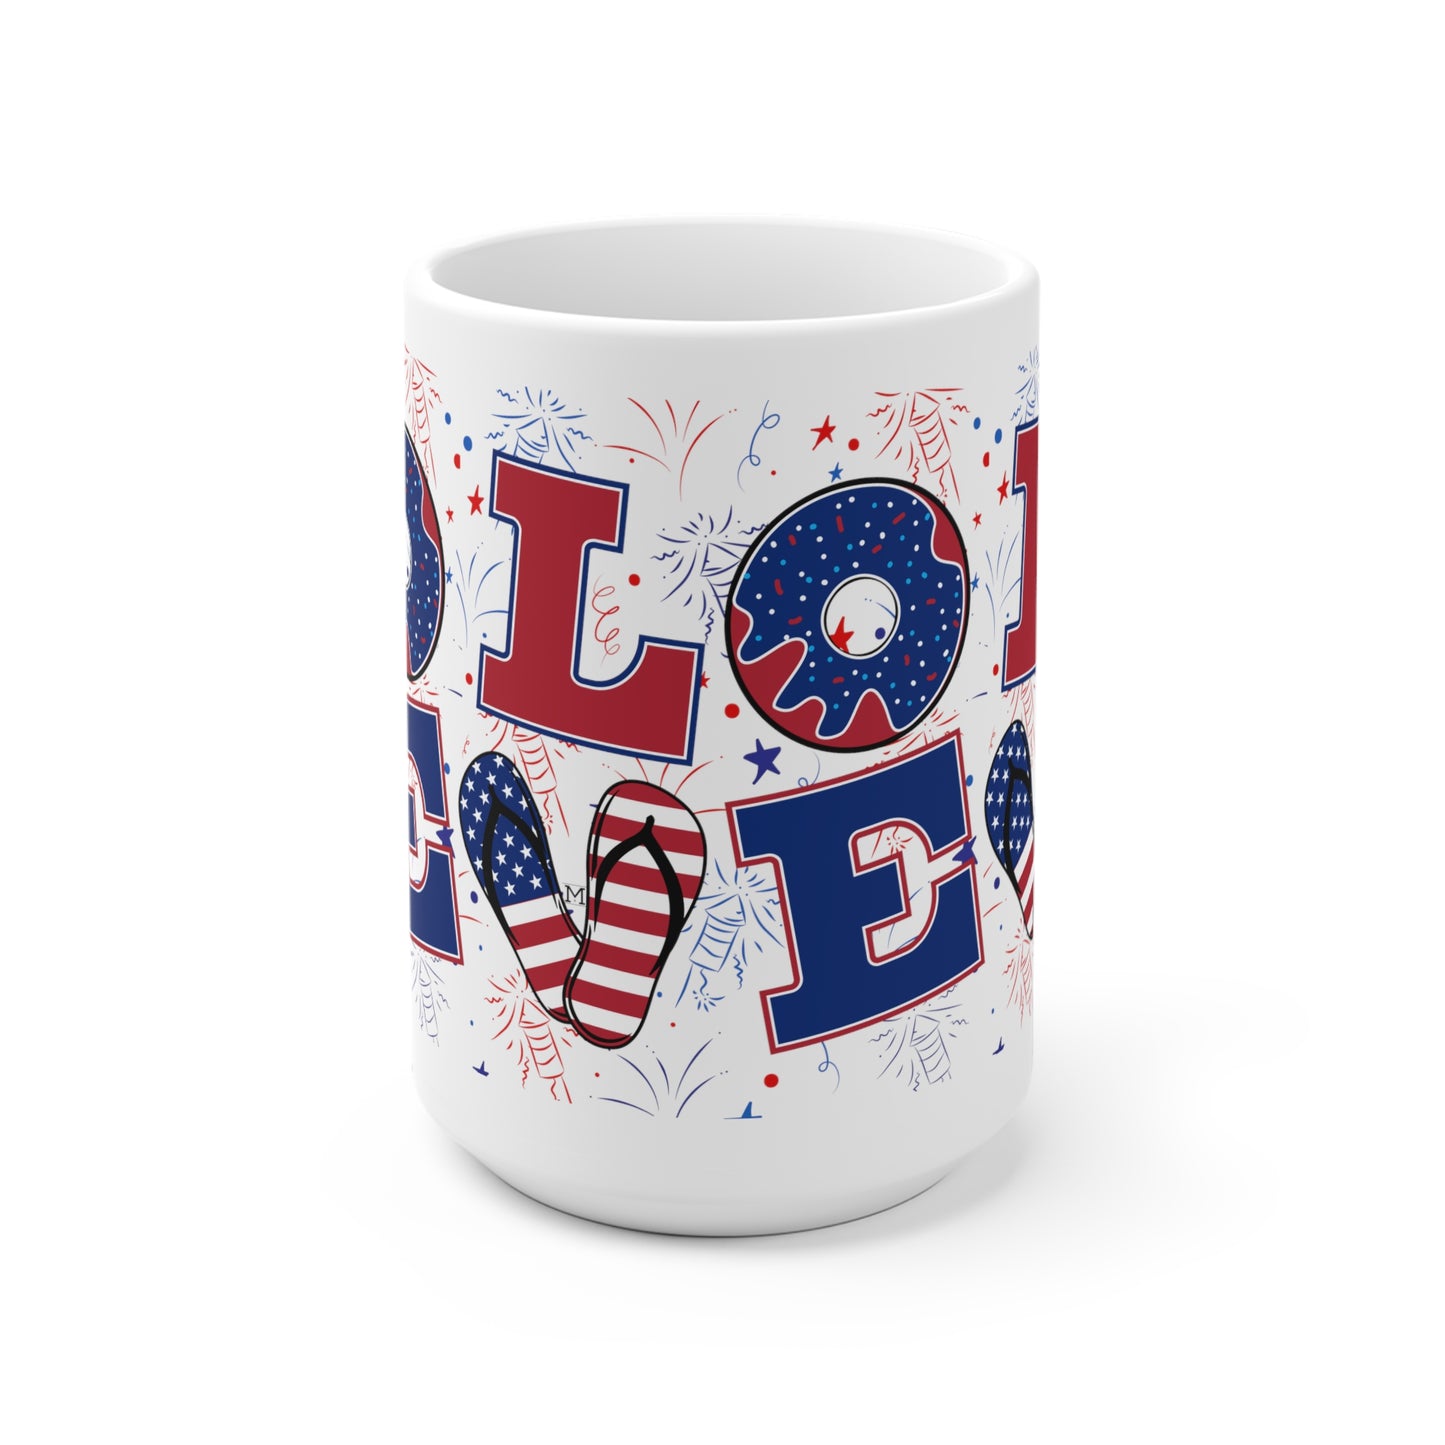 Love in red white blue patriotic patterns White Ceramic Mug by MII Designs 11oz OR 15oz